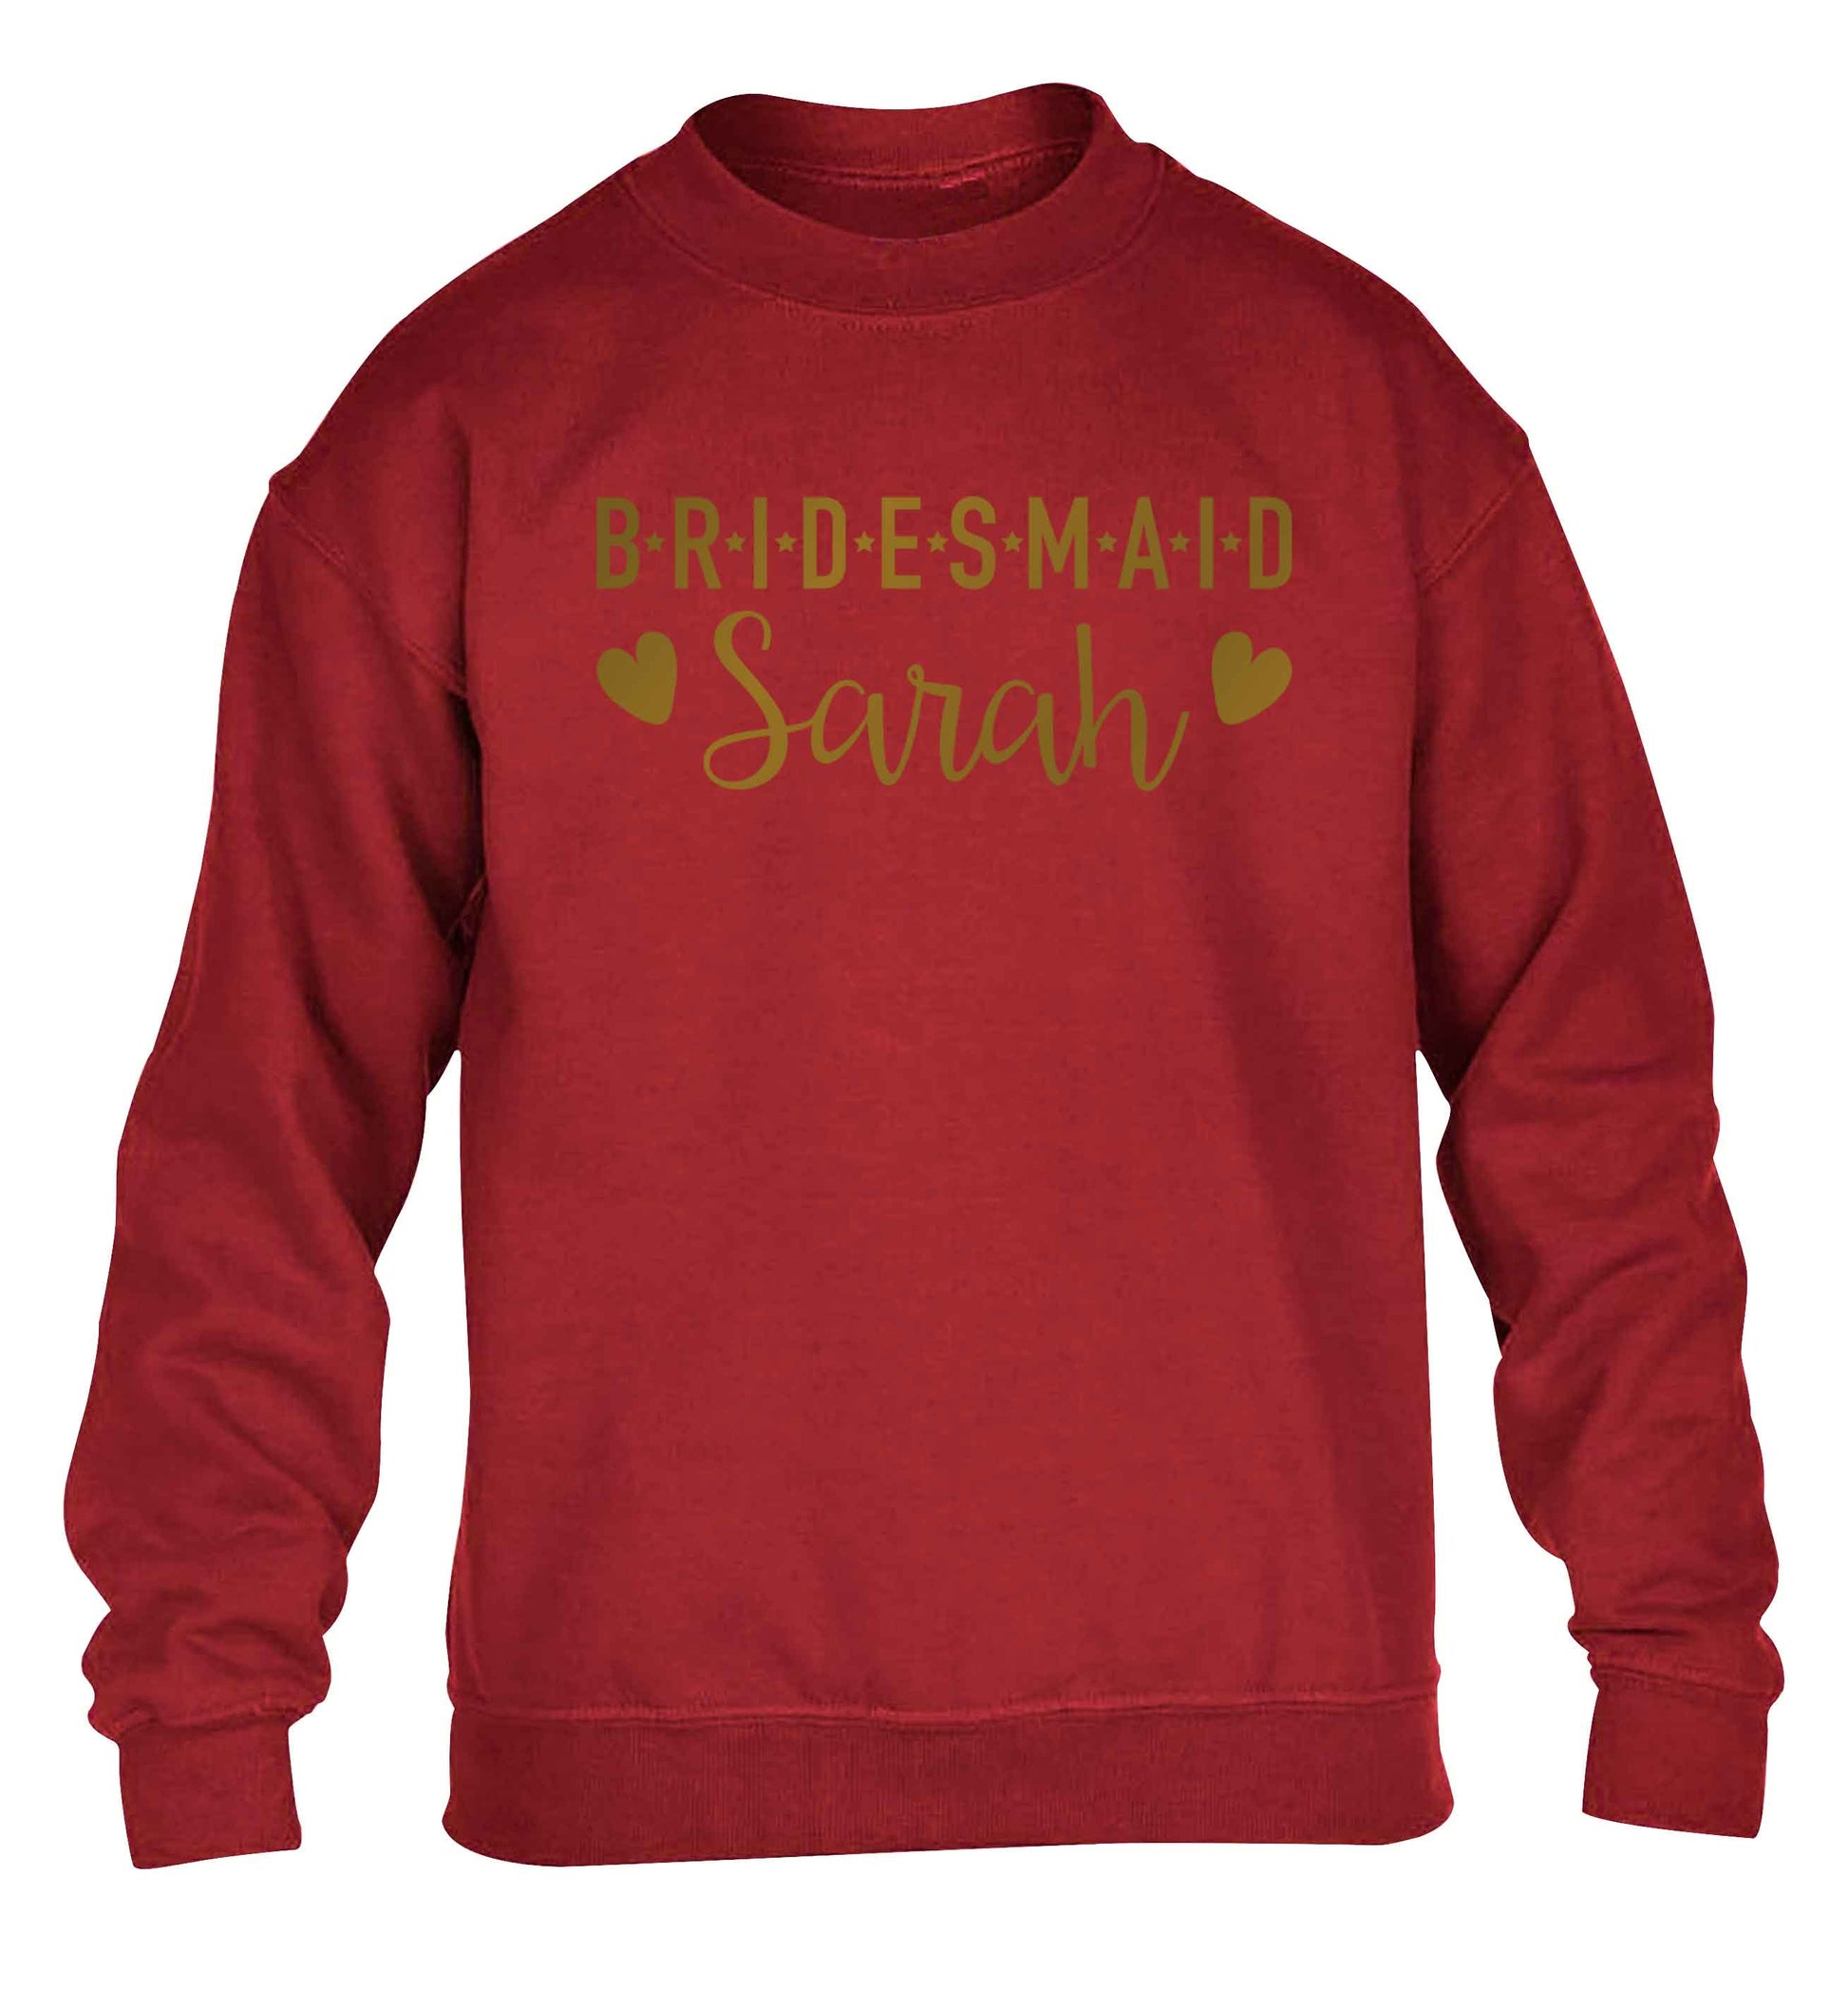 Personalised bridesmaid children's grey sweater 12-13 Years